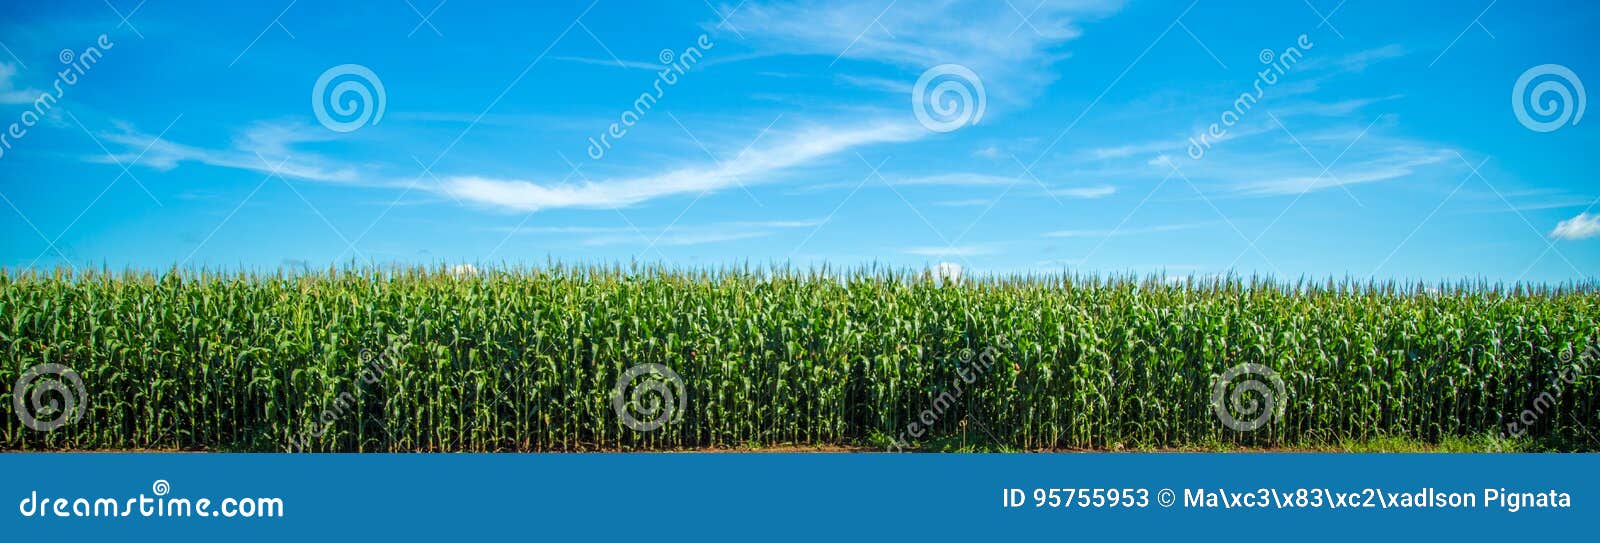 cornfield plantation plant